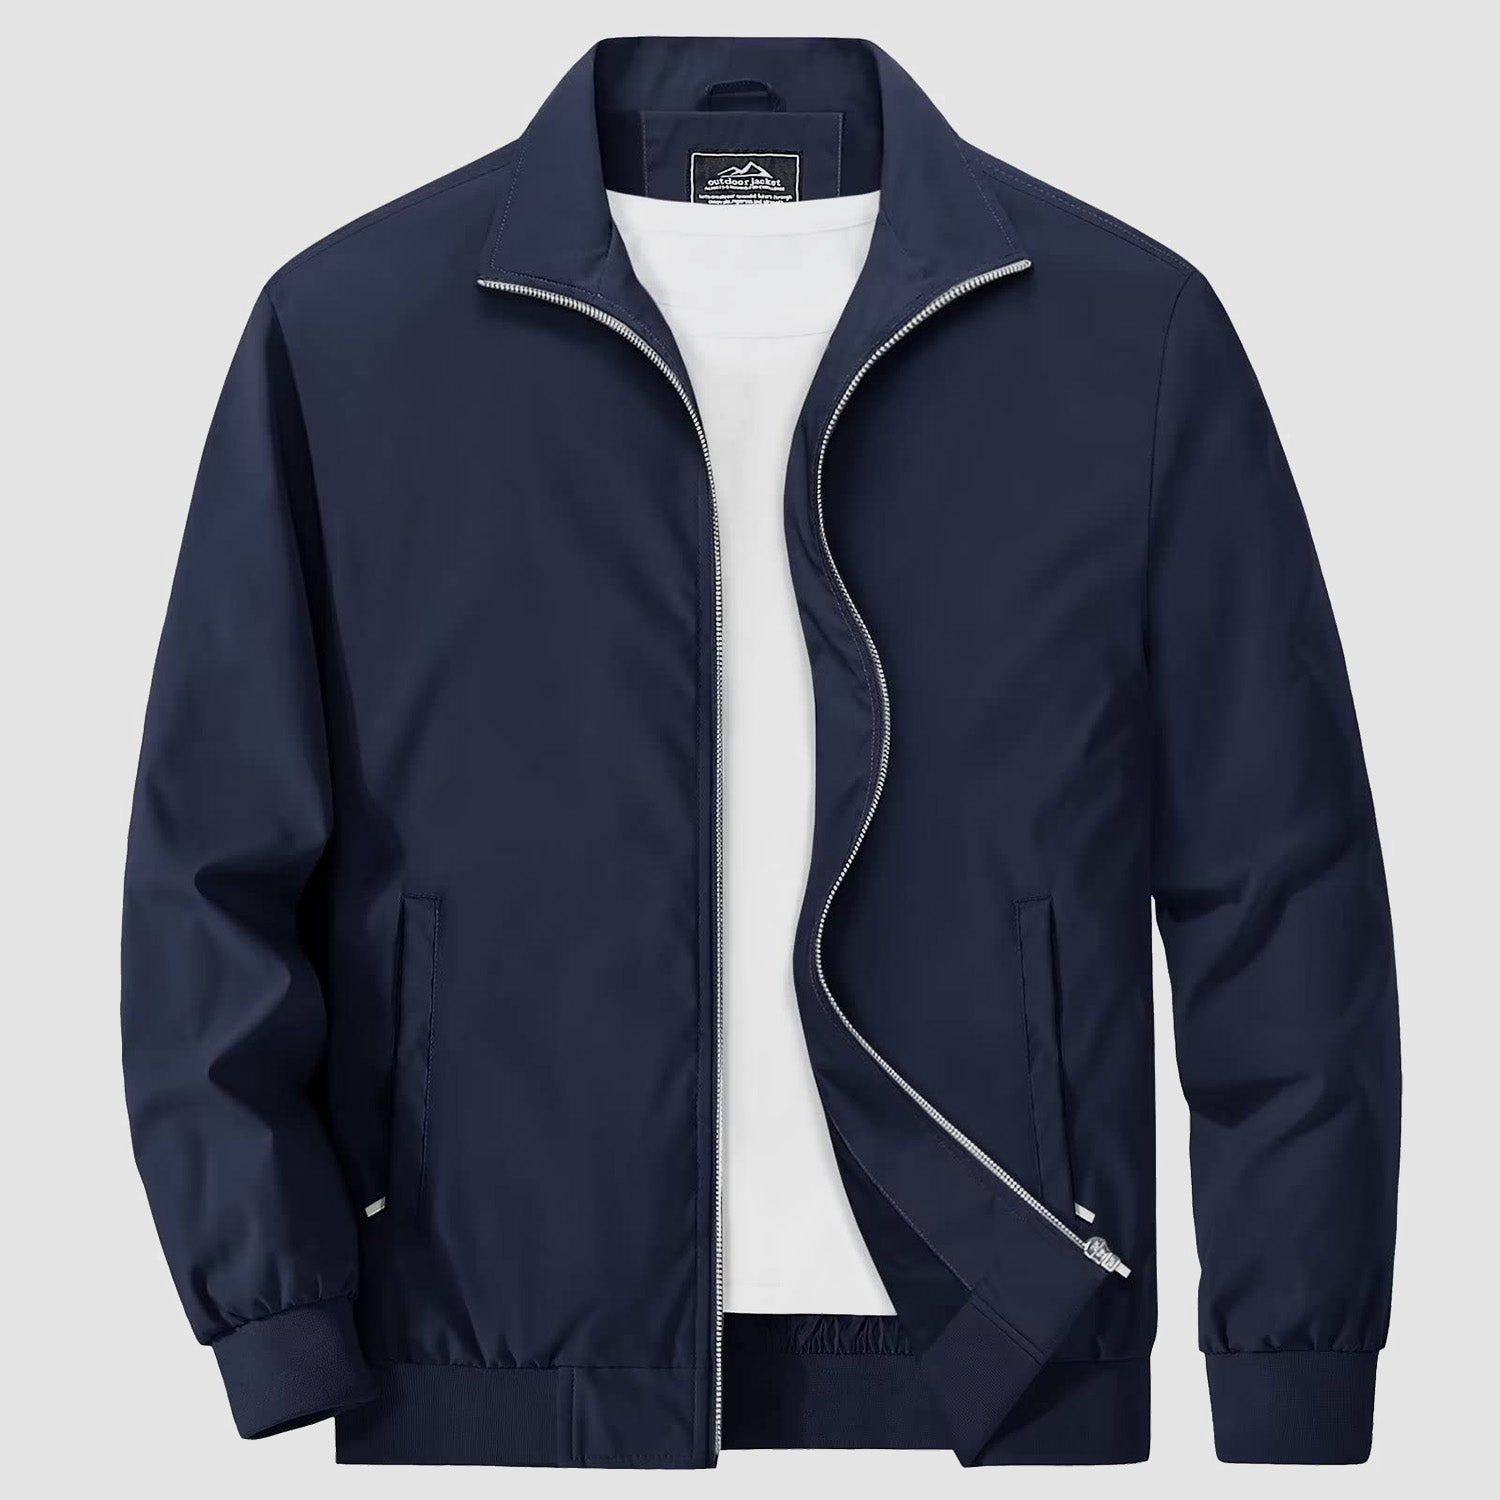 Men's Jacket Stand Collar Lightweight Windproof Outwear Windbreaker for  Spring